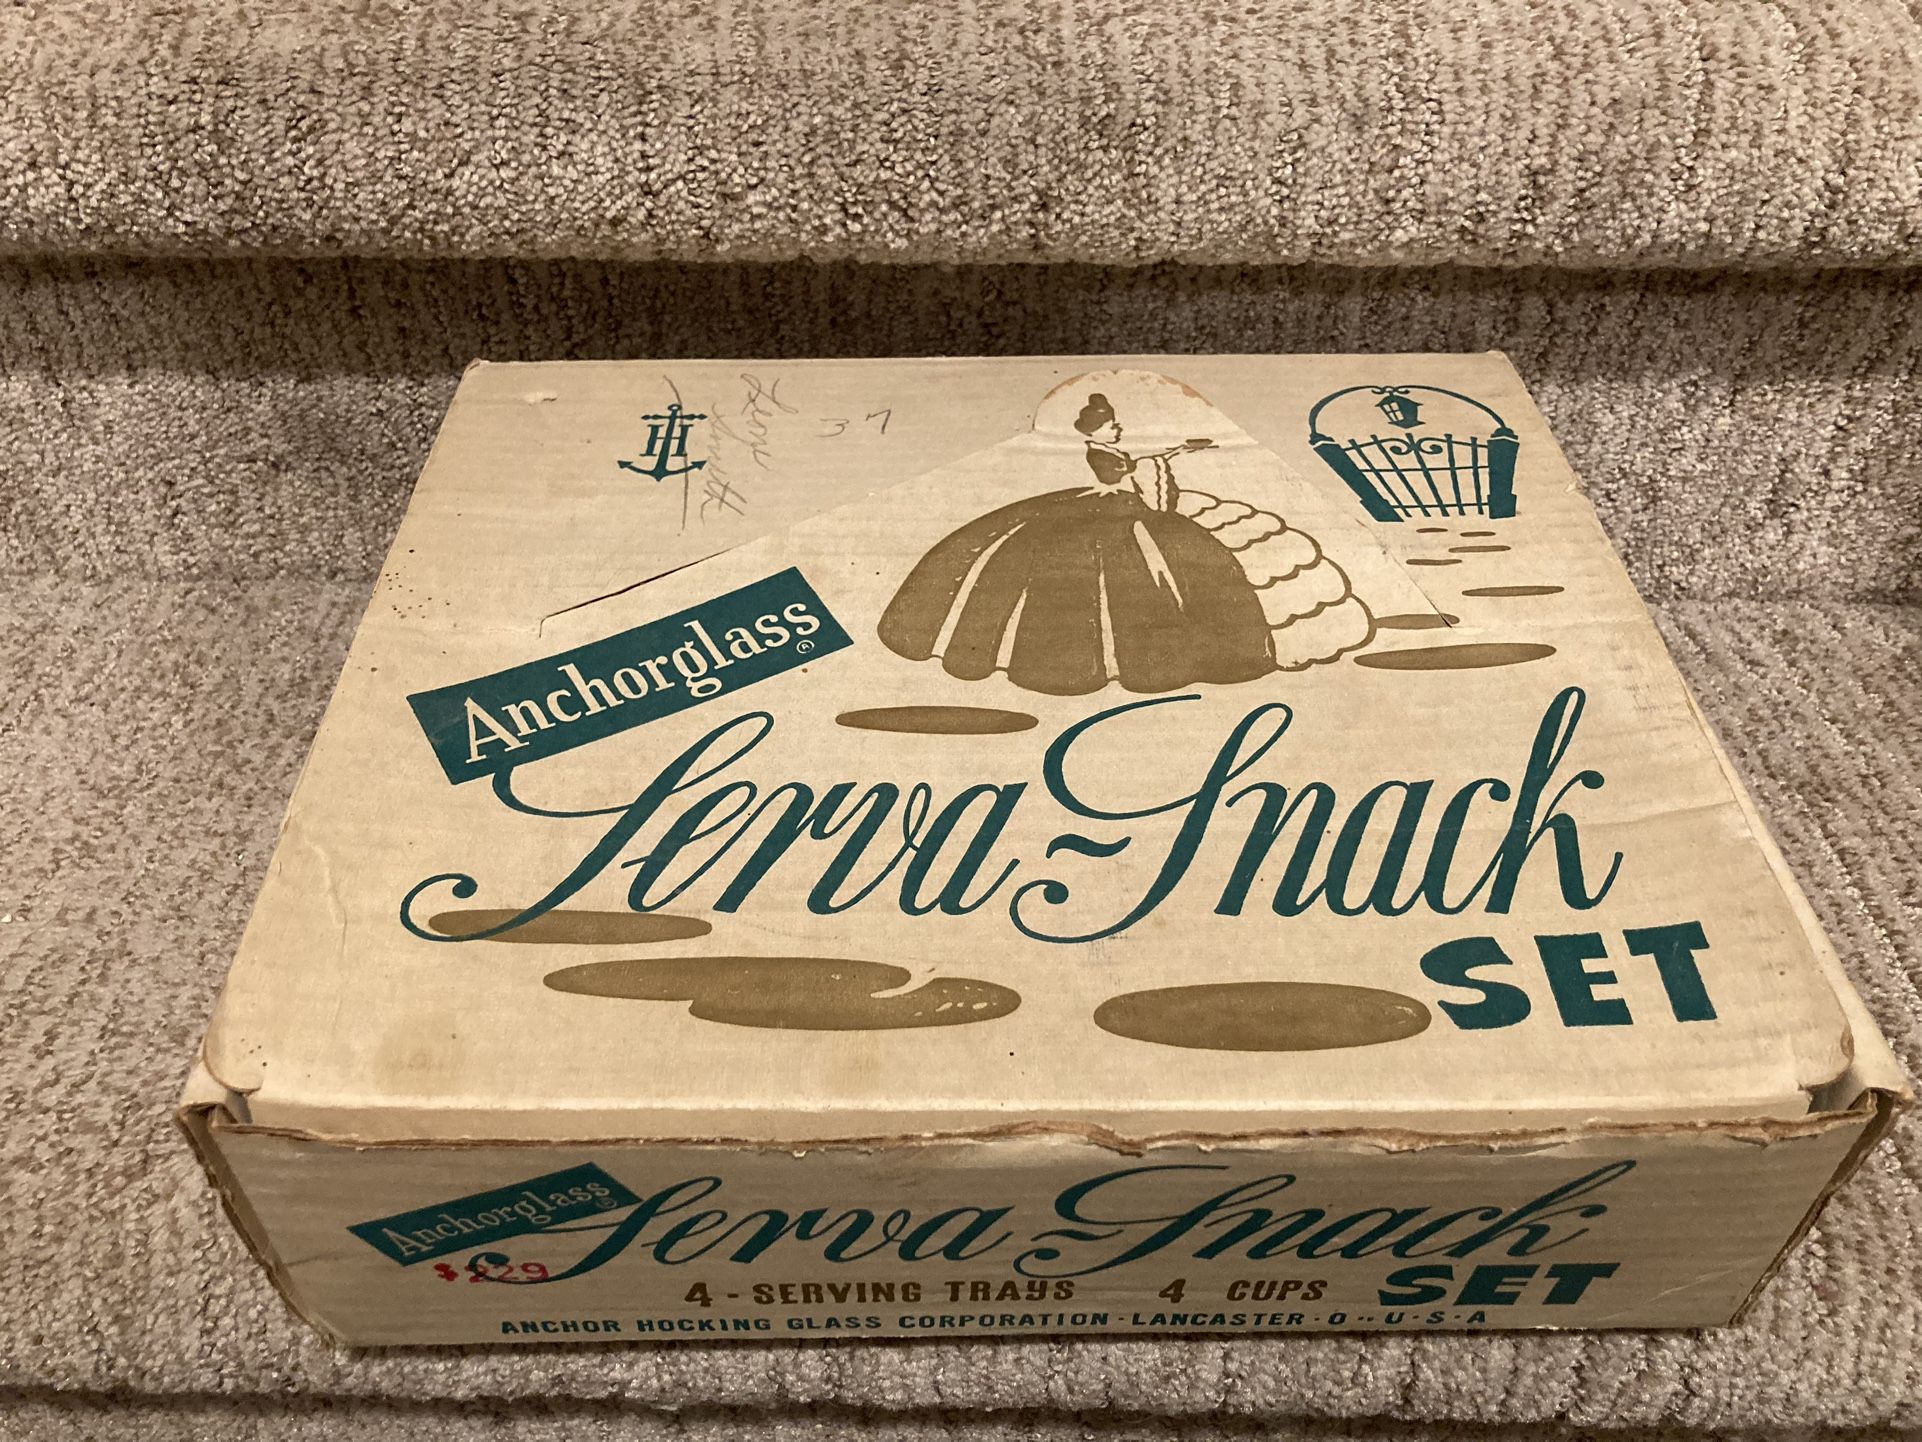 Brand New Vintage Anchor Glass Server Snack Set In Original Box!